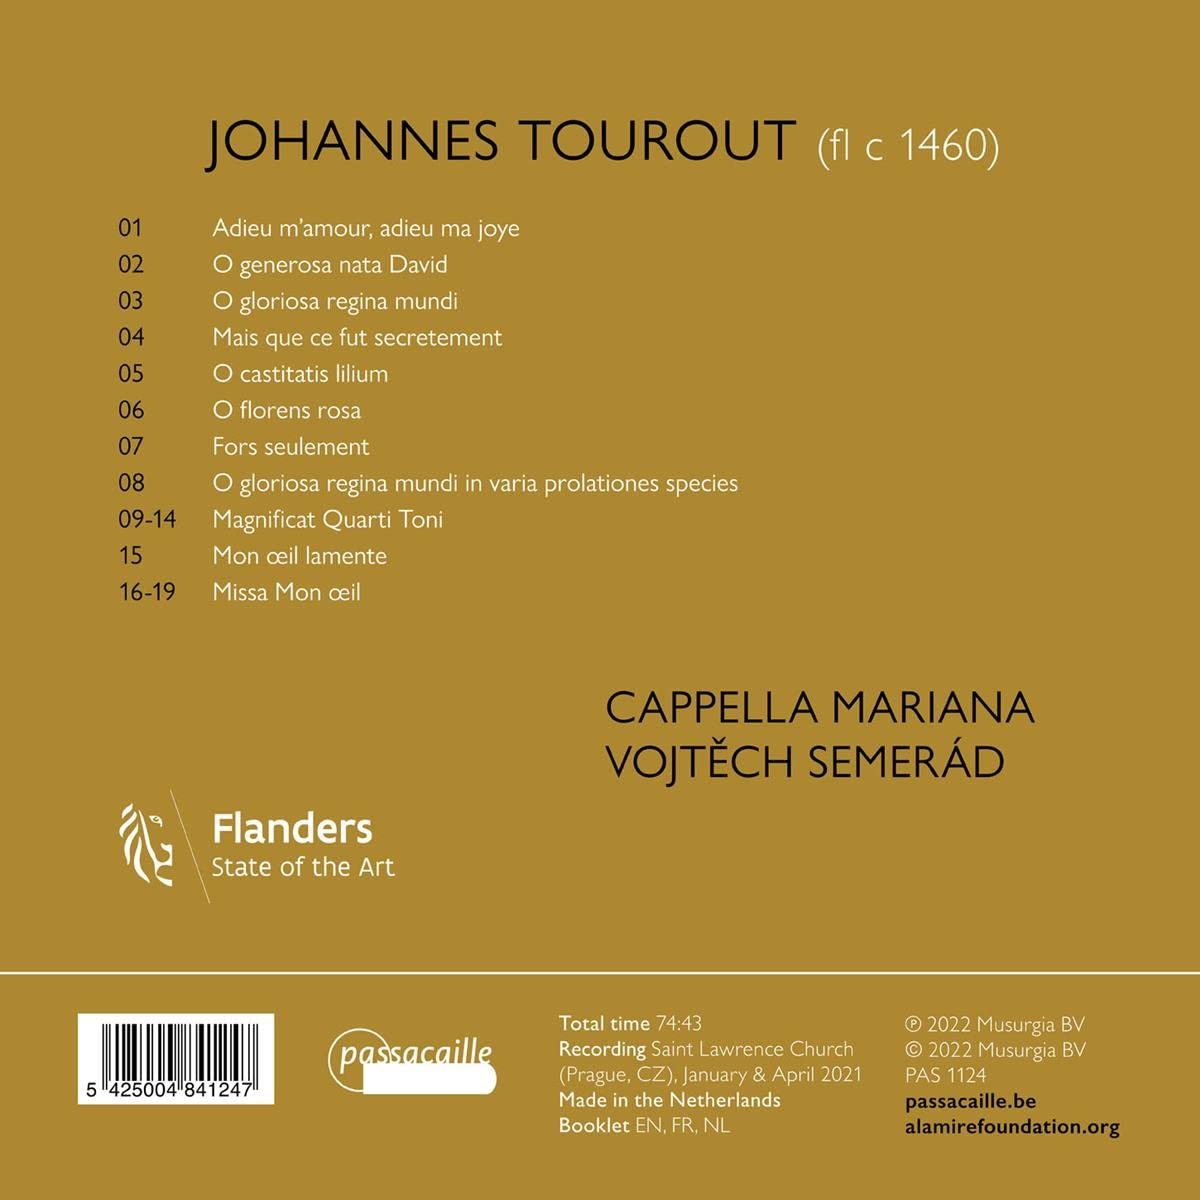 Cappella Mariana 요하네스 타우라우트: 샹성과 모테트 (Johannes Tourout: Portrait Of An Imperial Cantor) 